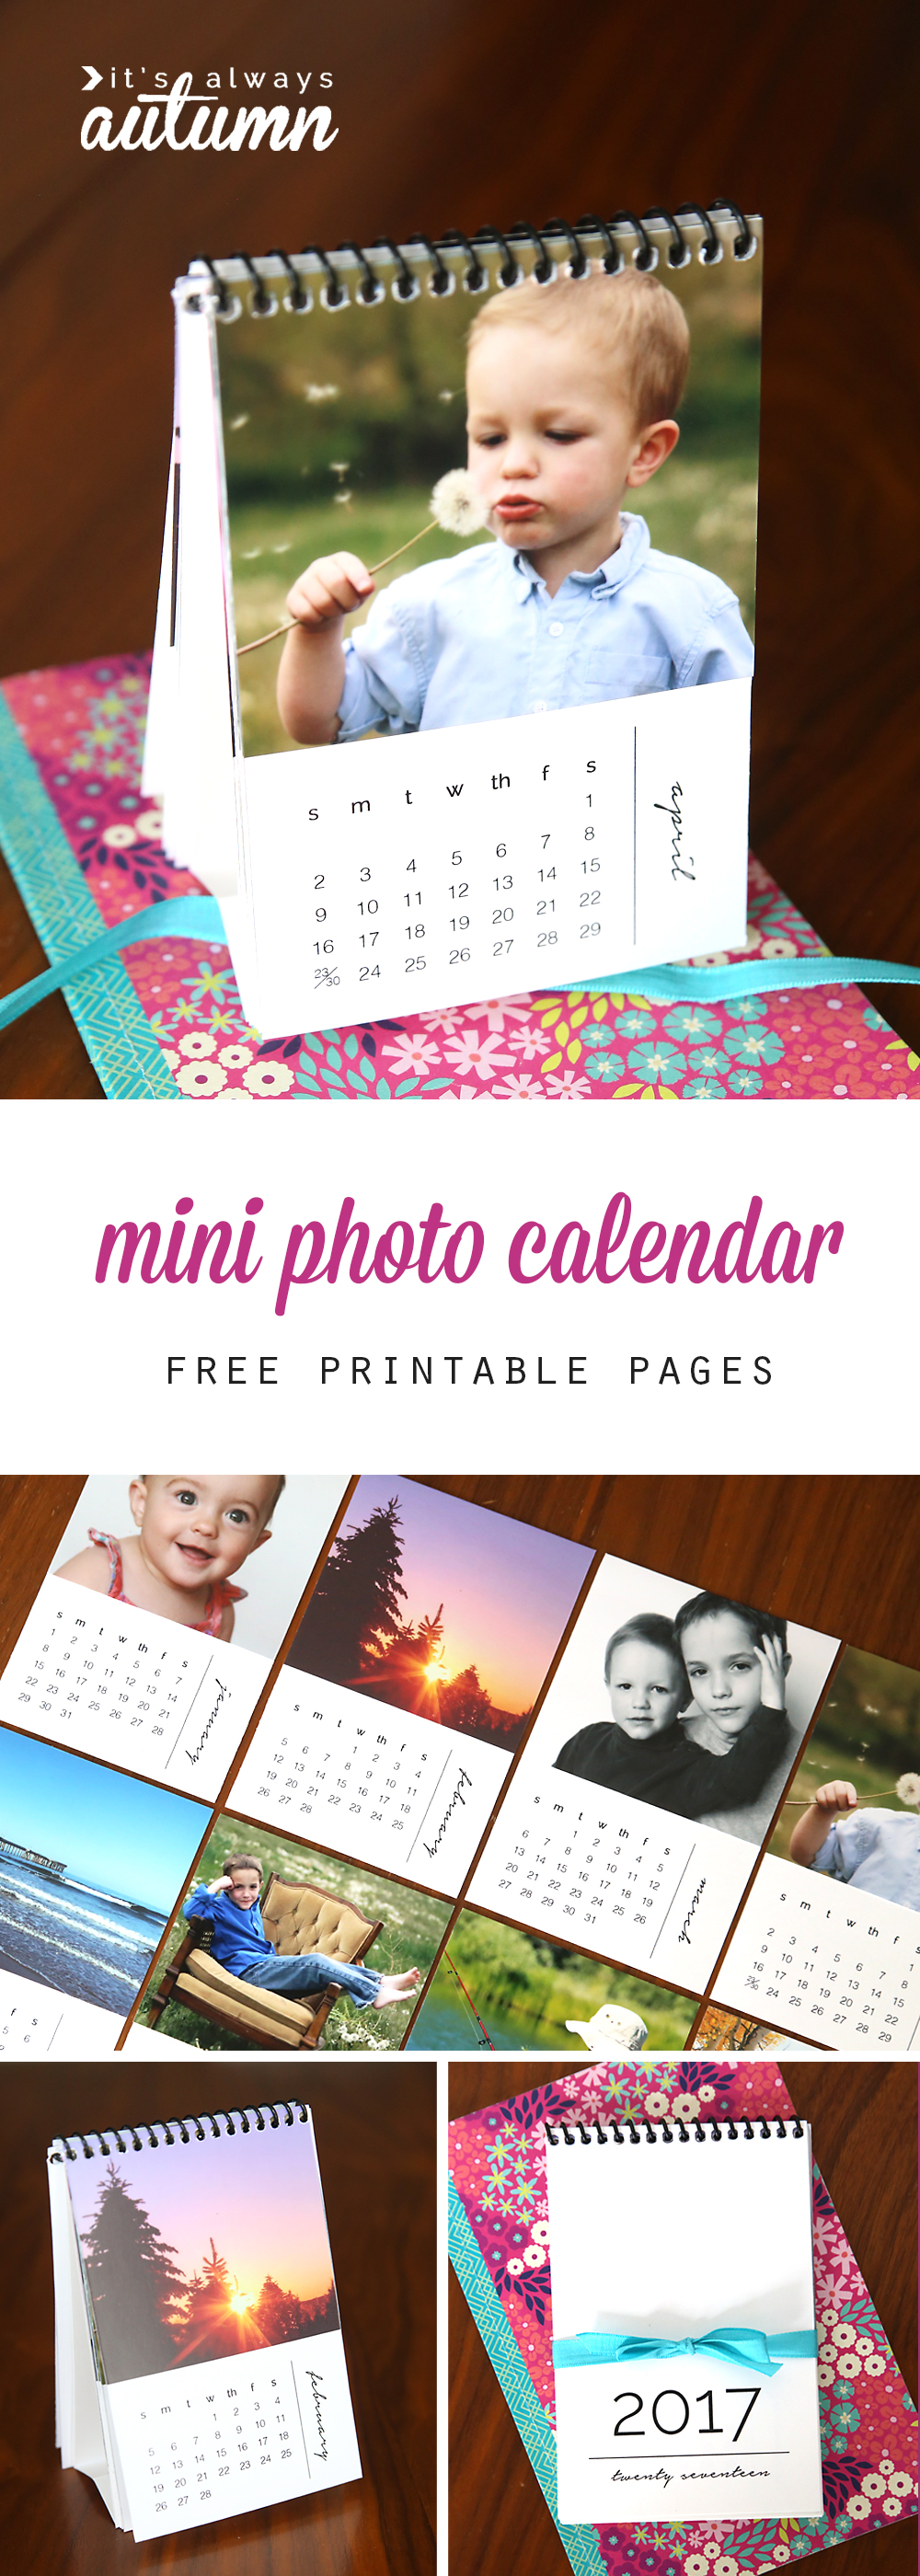 DIY Personalized Mini Photo Calendar